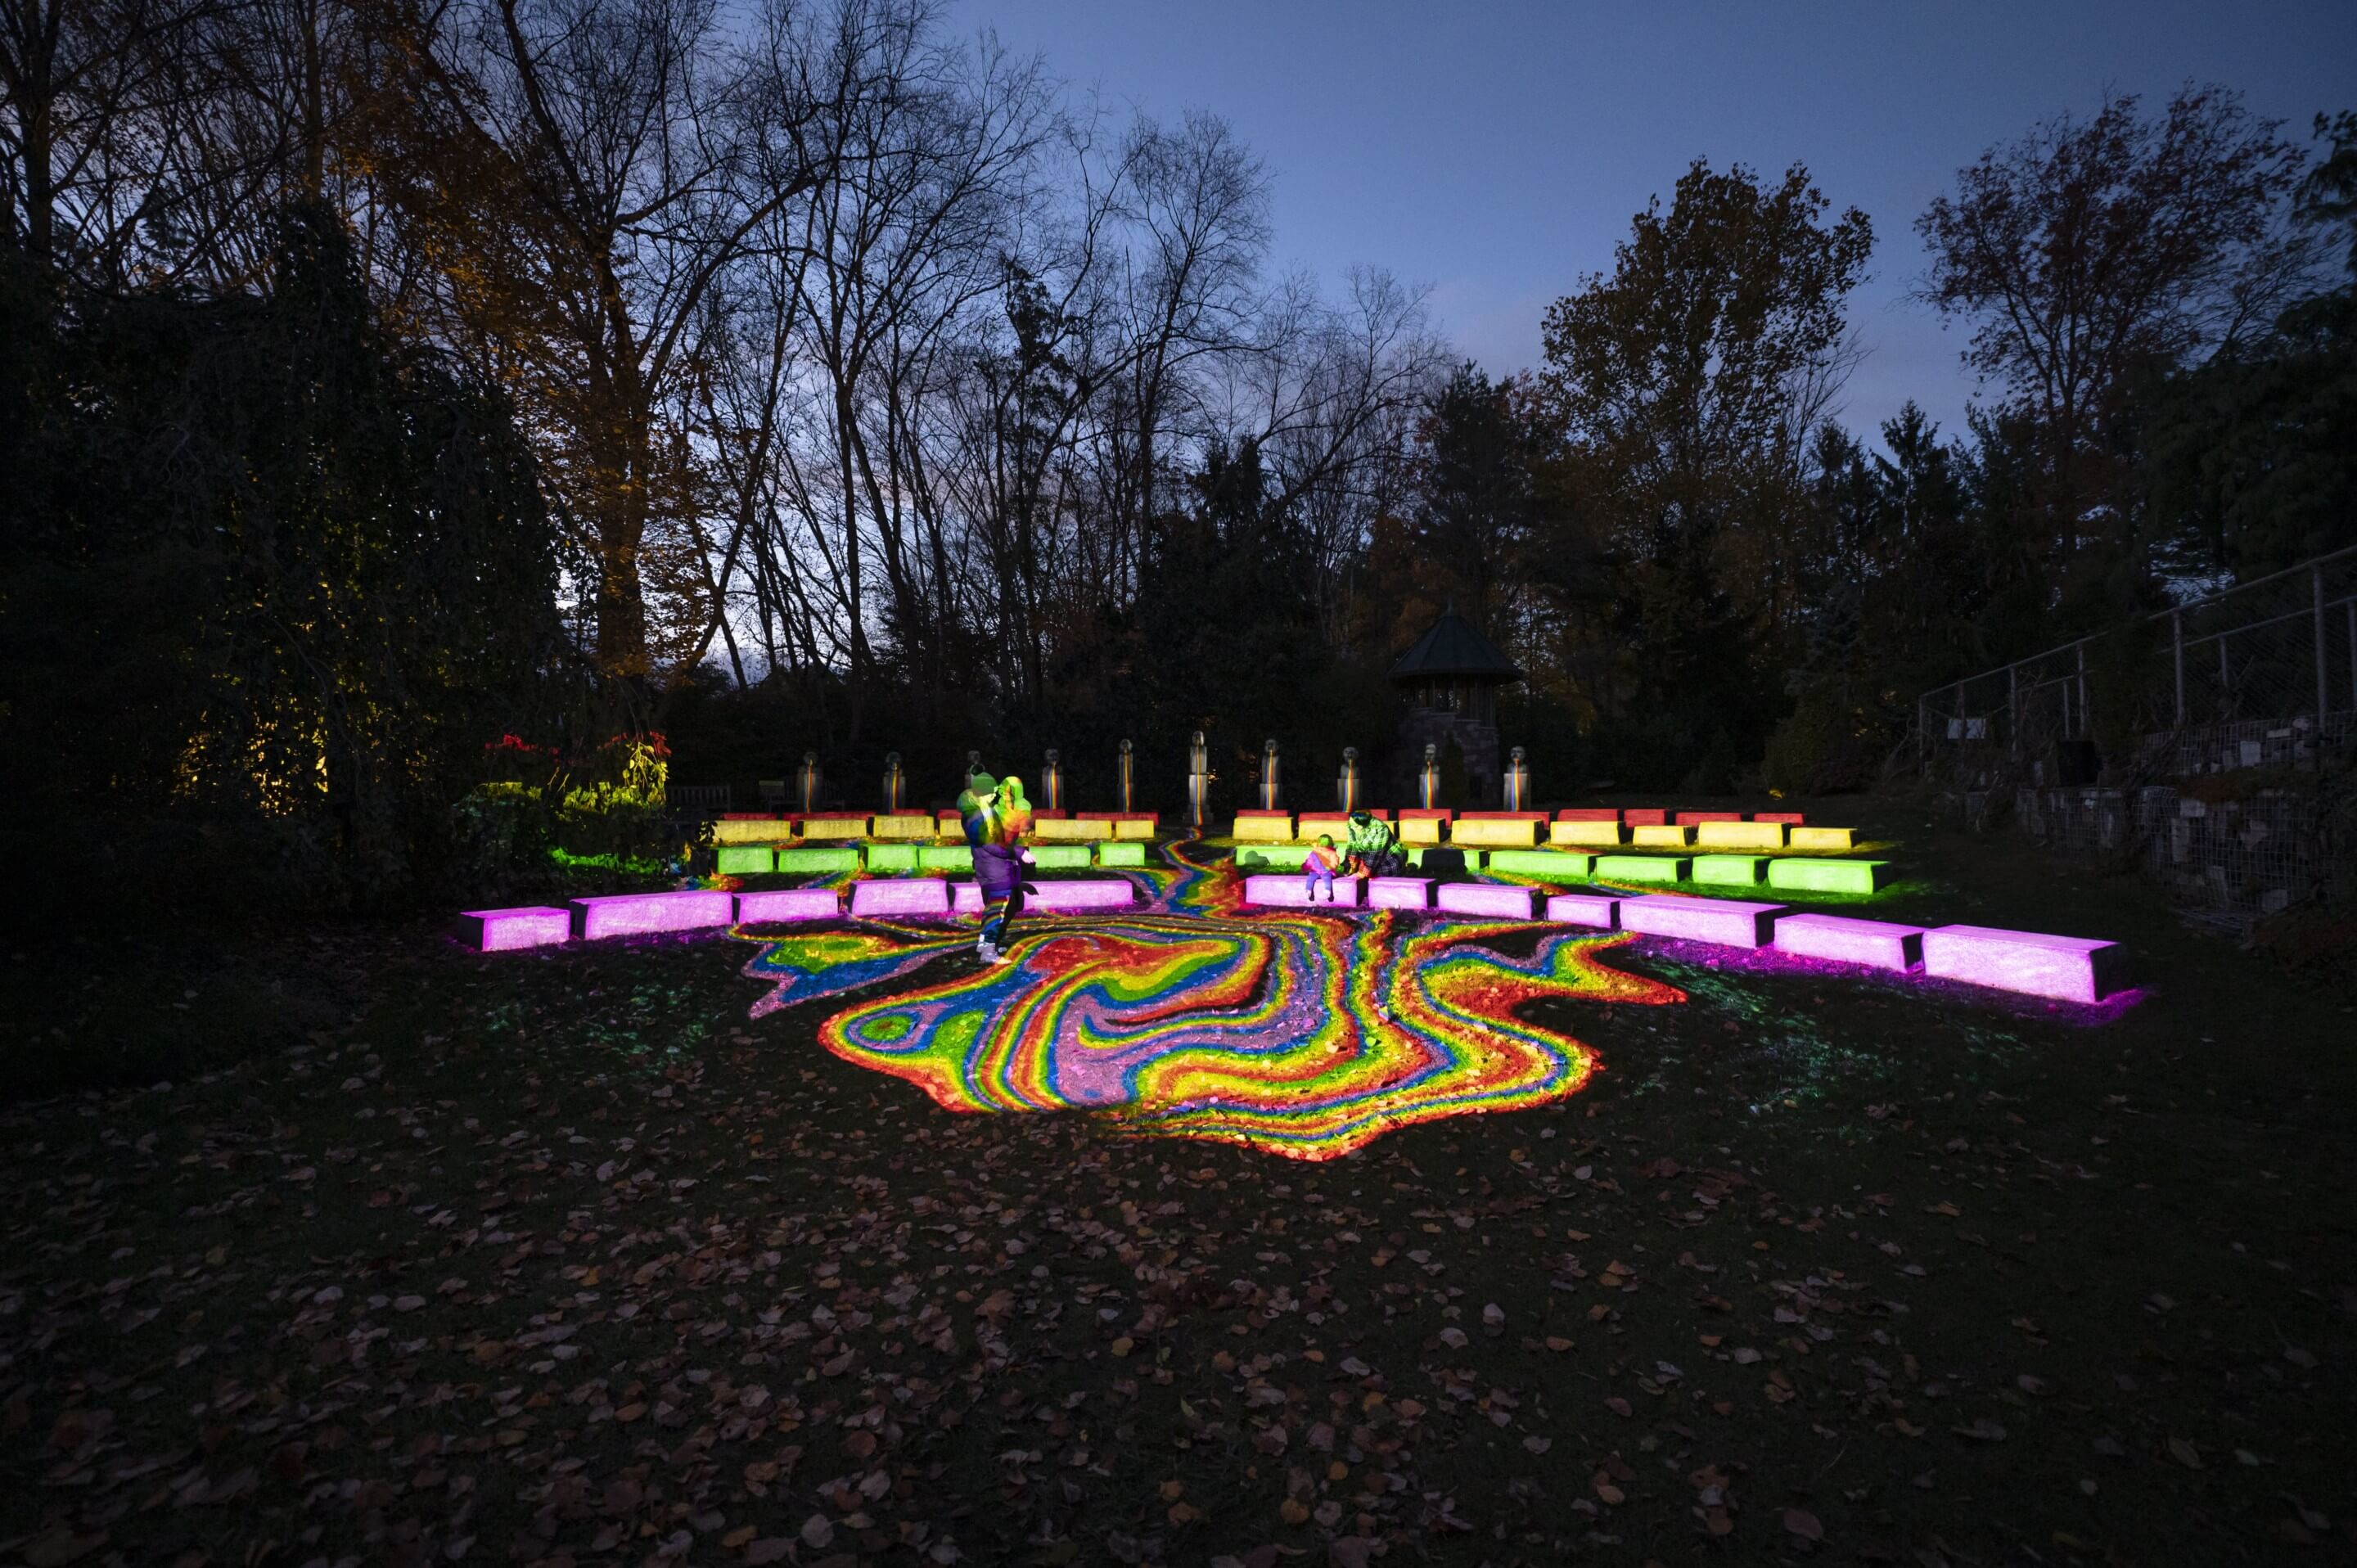 A multicolored installation at night